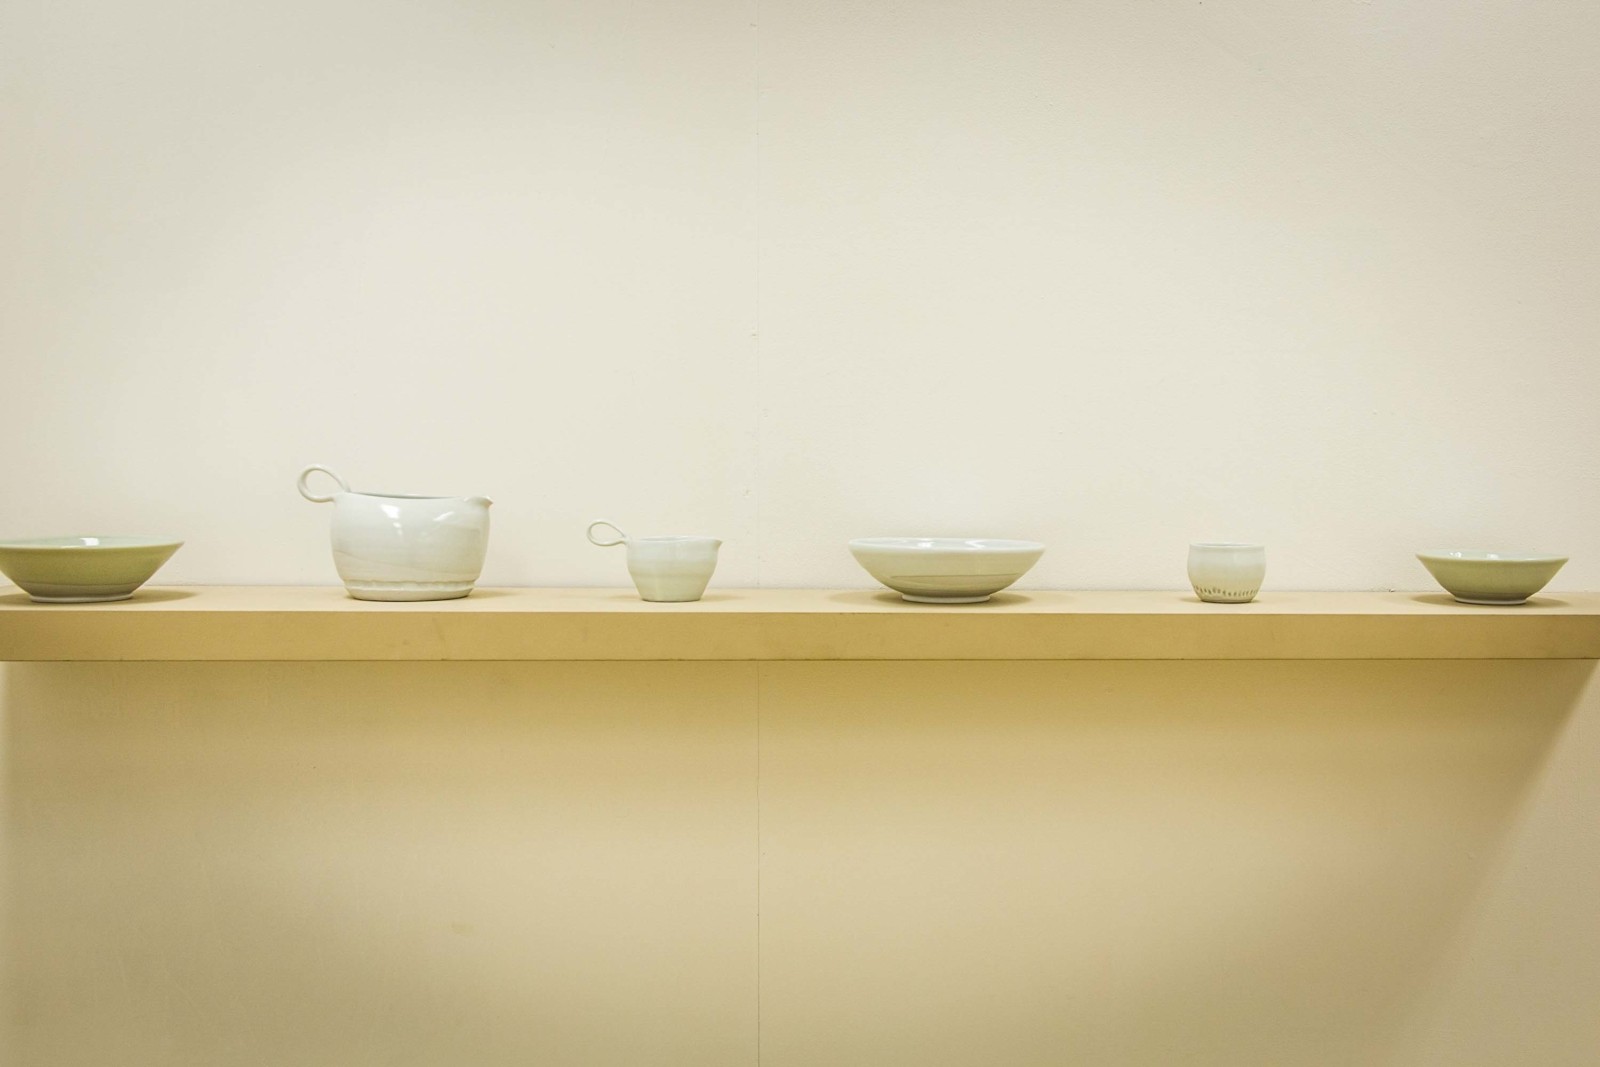 Porzelan Serie, Porcelain, ceramics, pottery, bowls